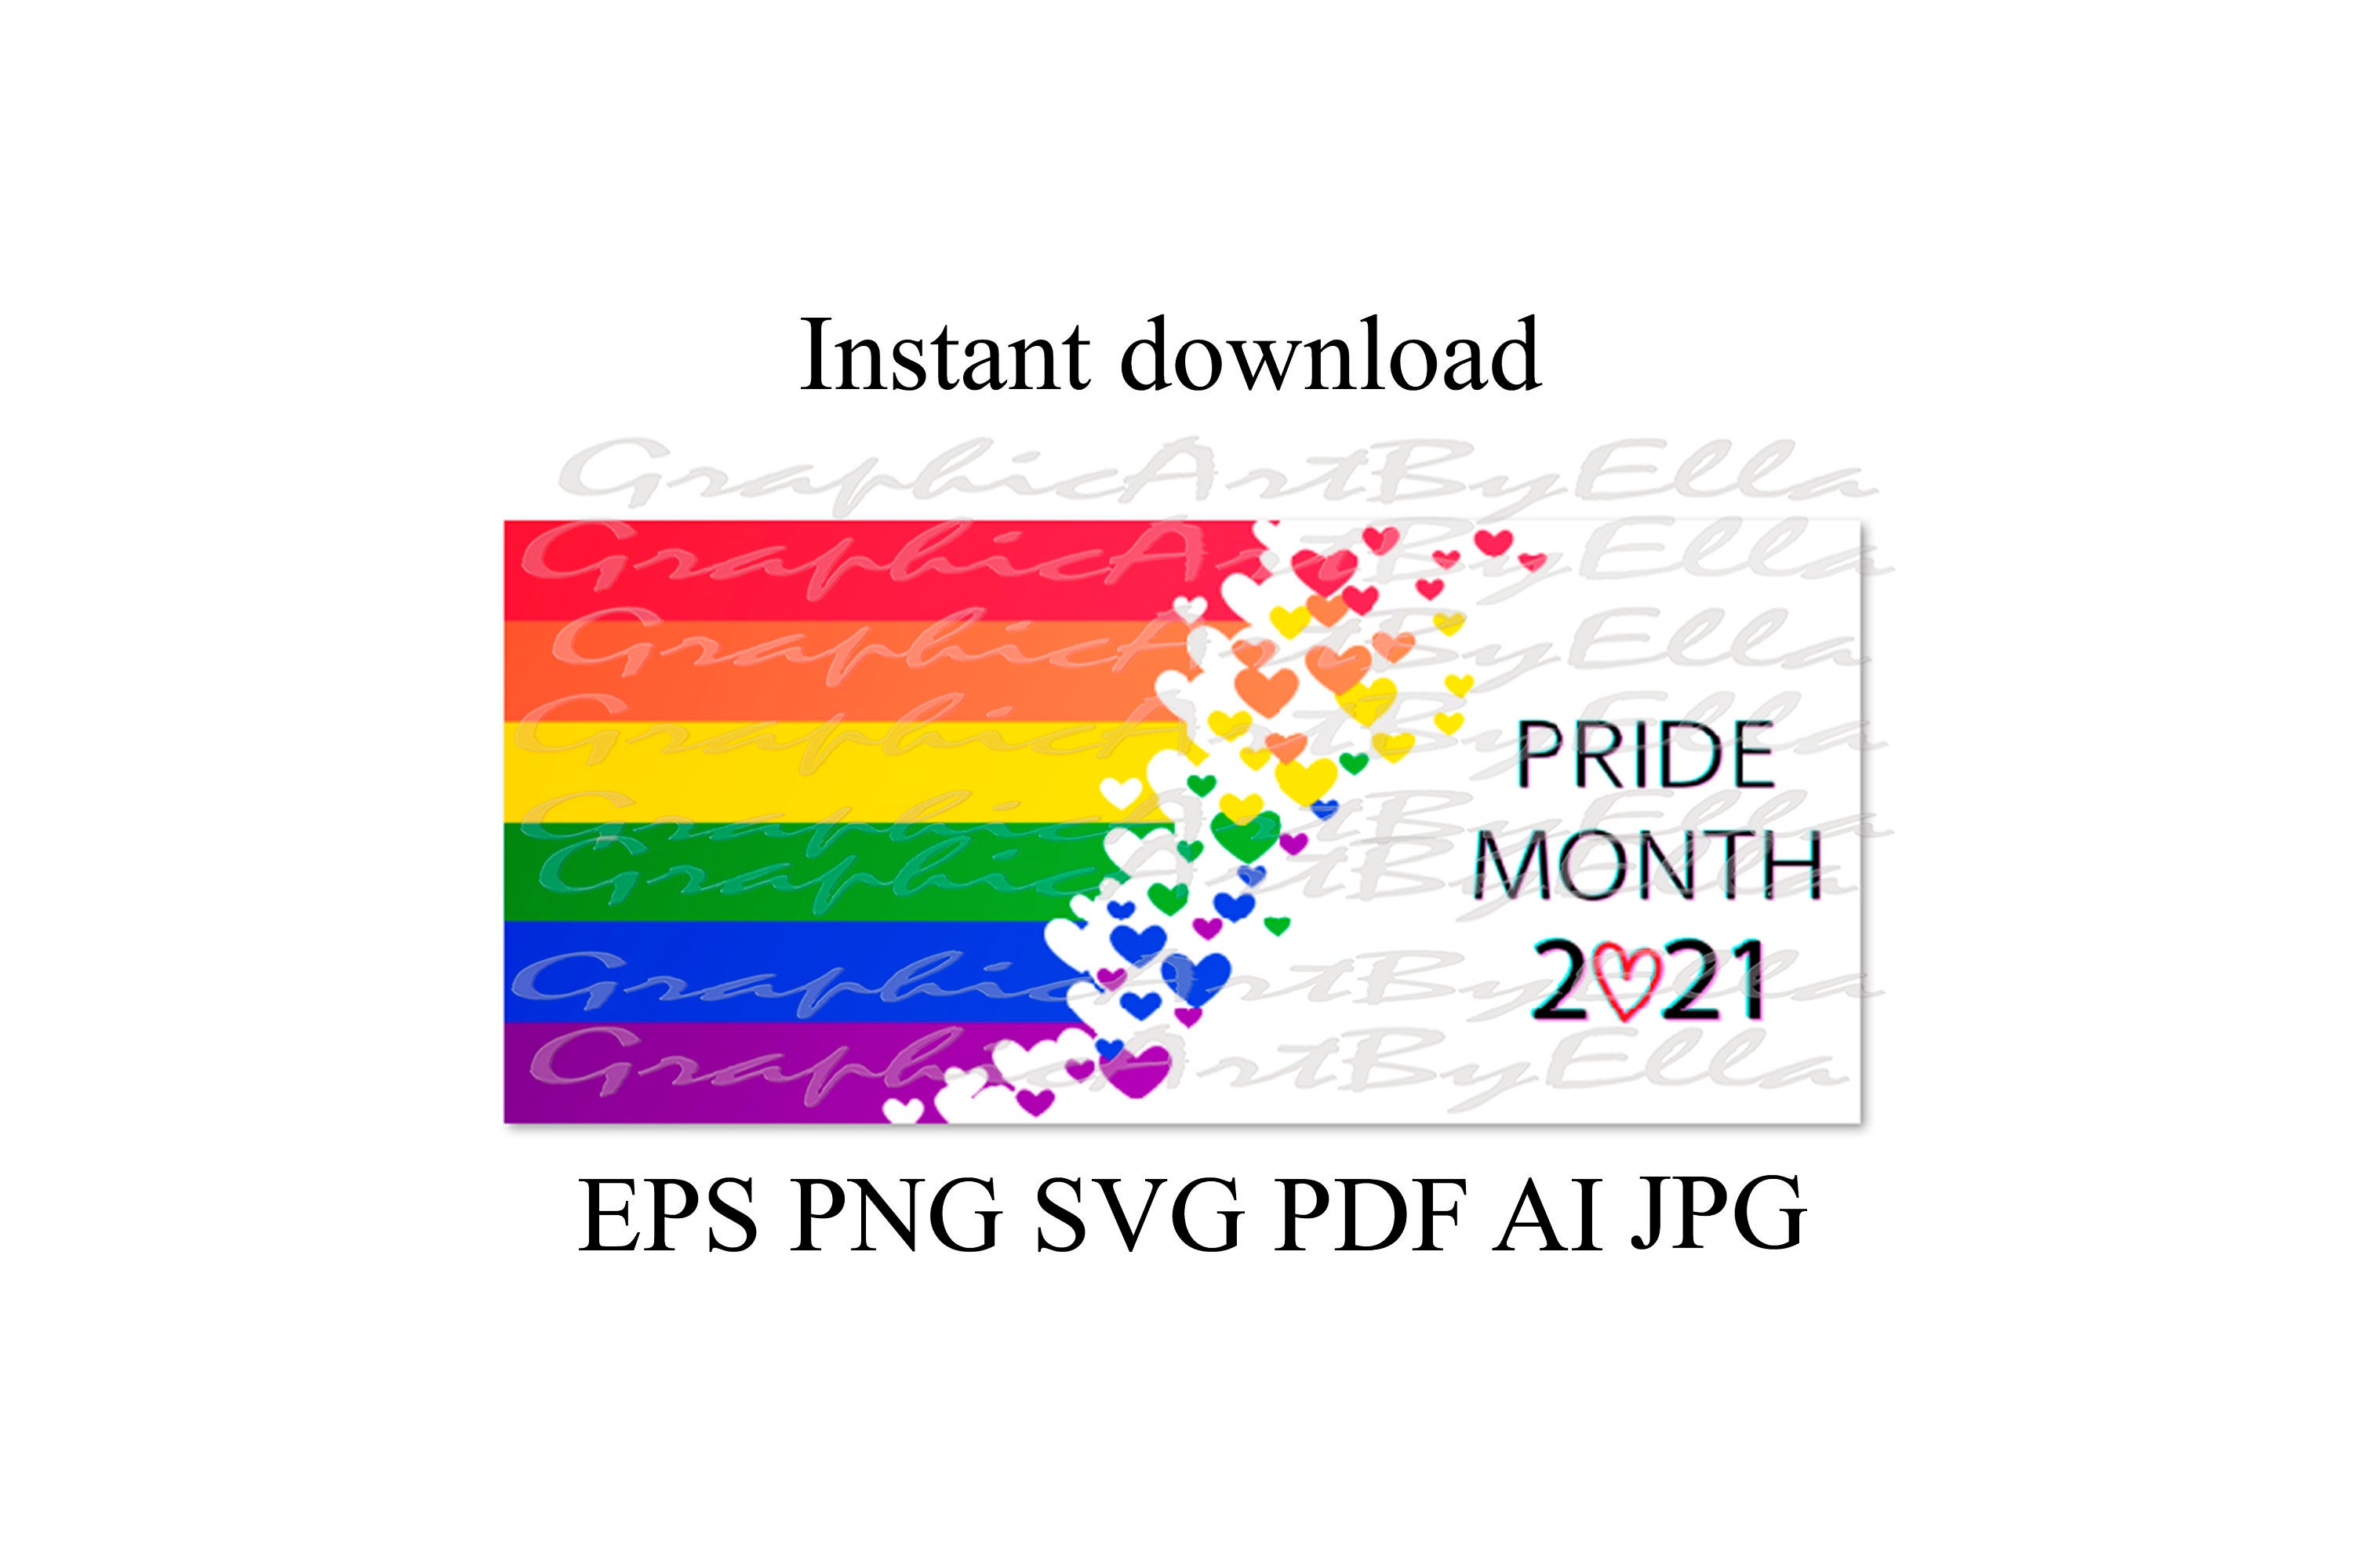 gay pride flag 2021